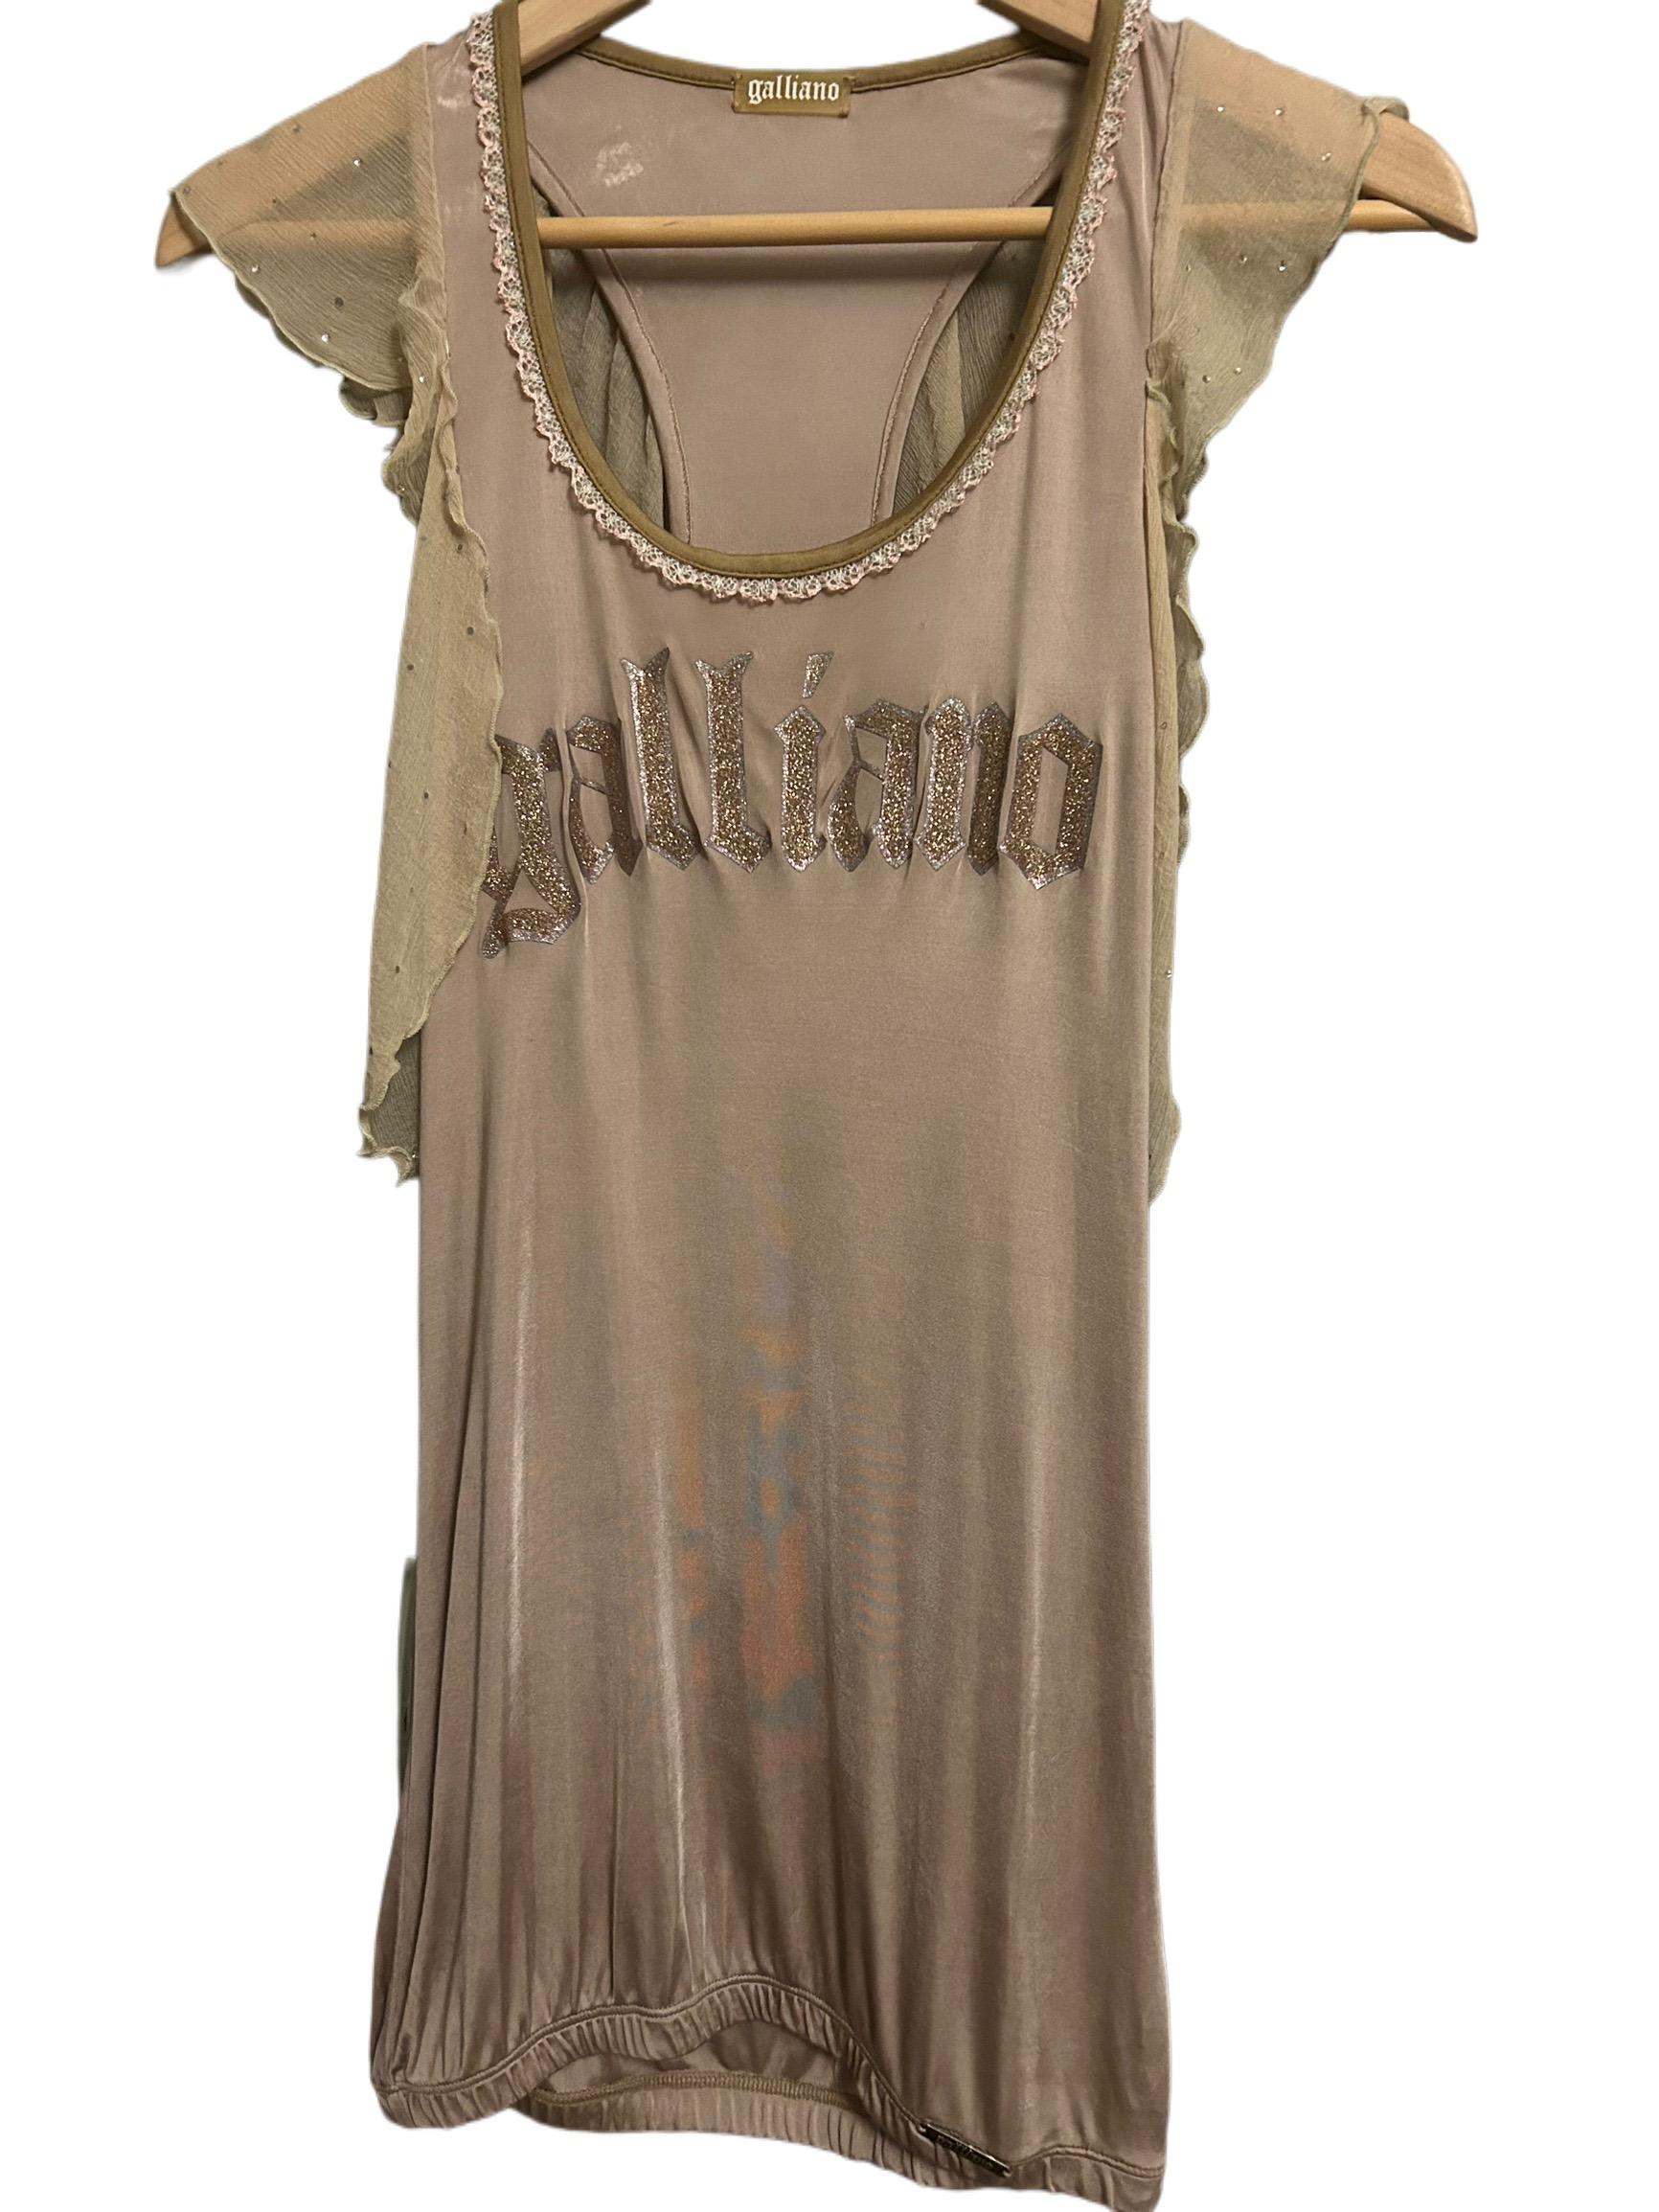 Vintage John Galliano Ladies top For Sale 5